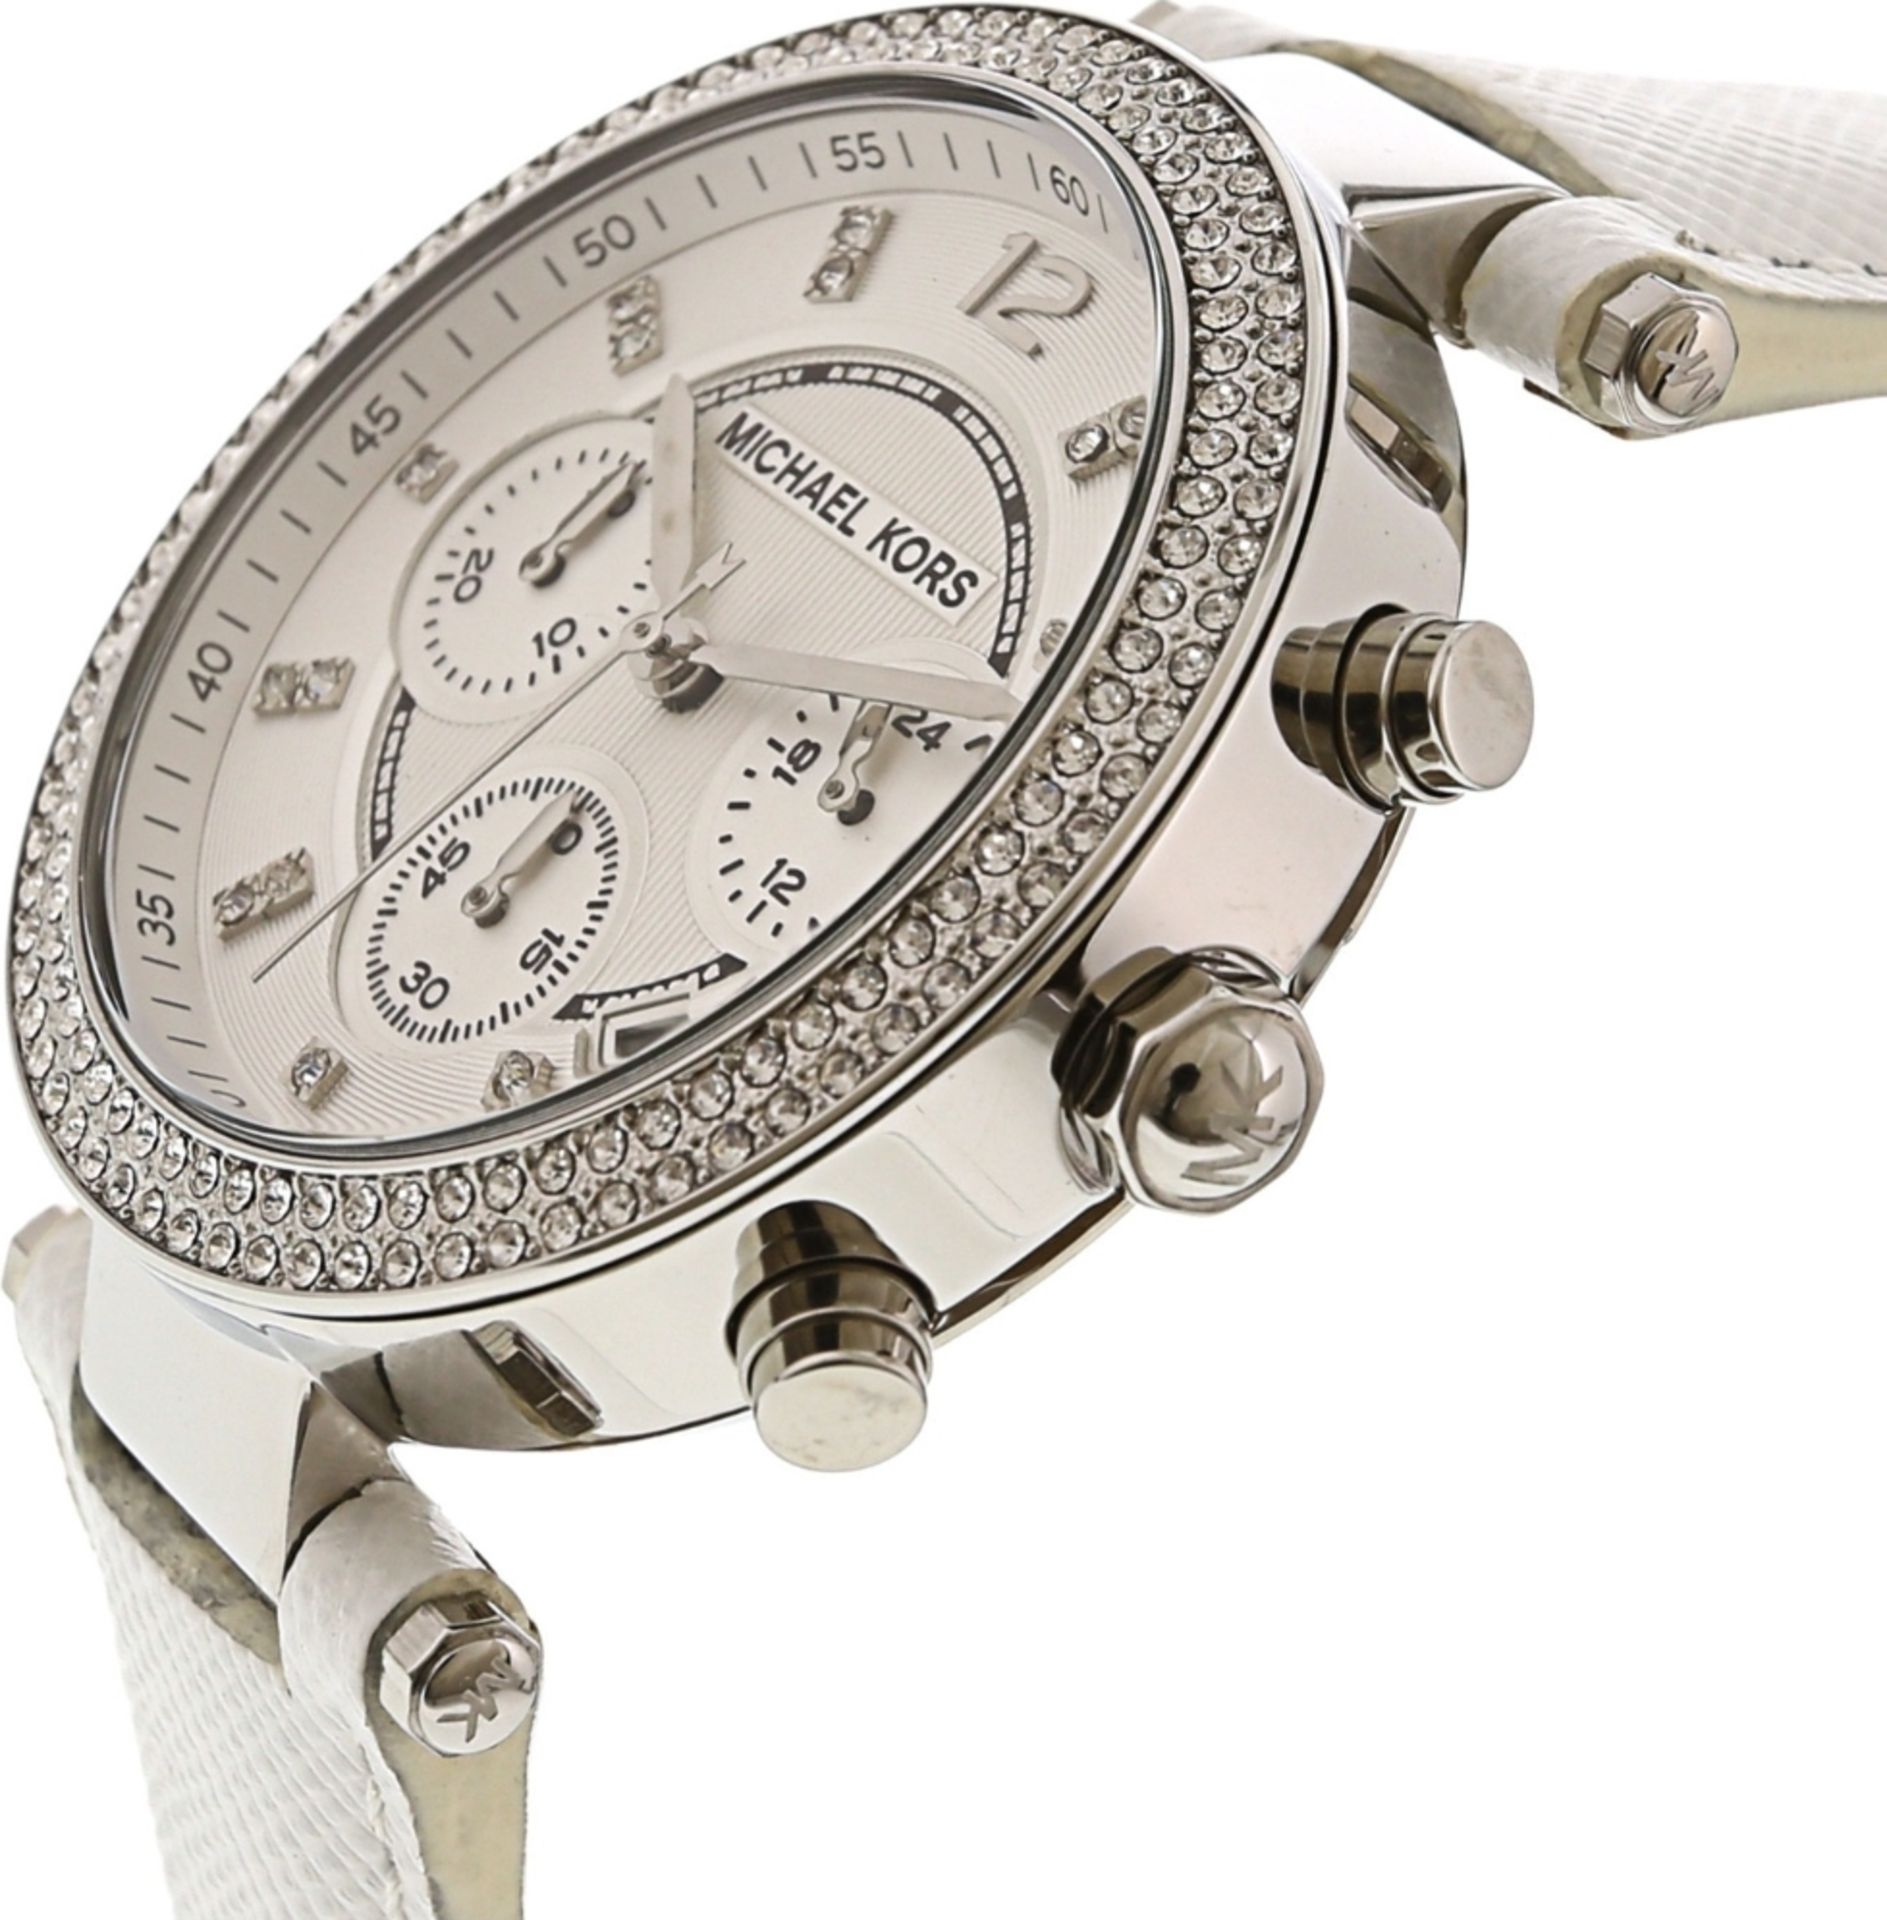 Michael Kors MK2277 Ladies Parker White Leather Strap quartz Chronograph Designer Watch - Image 5 of 8